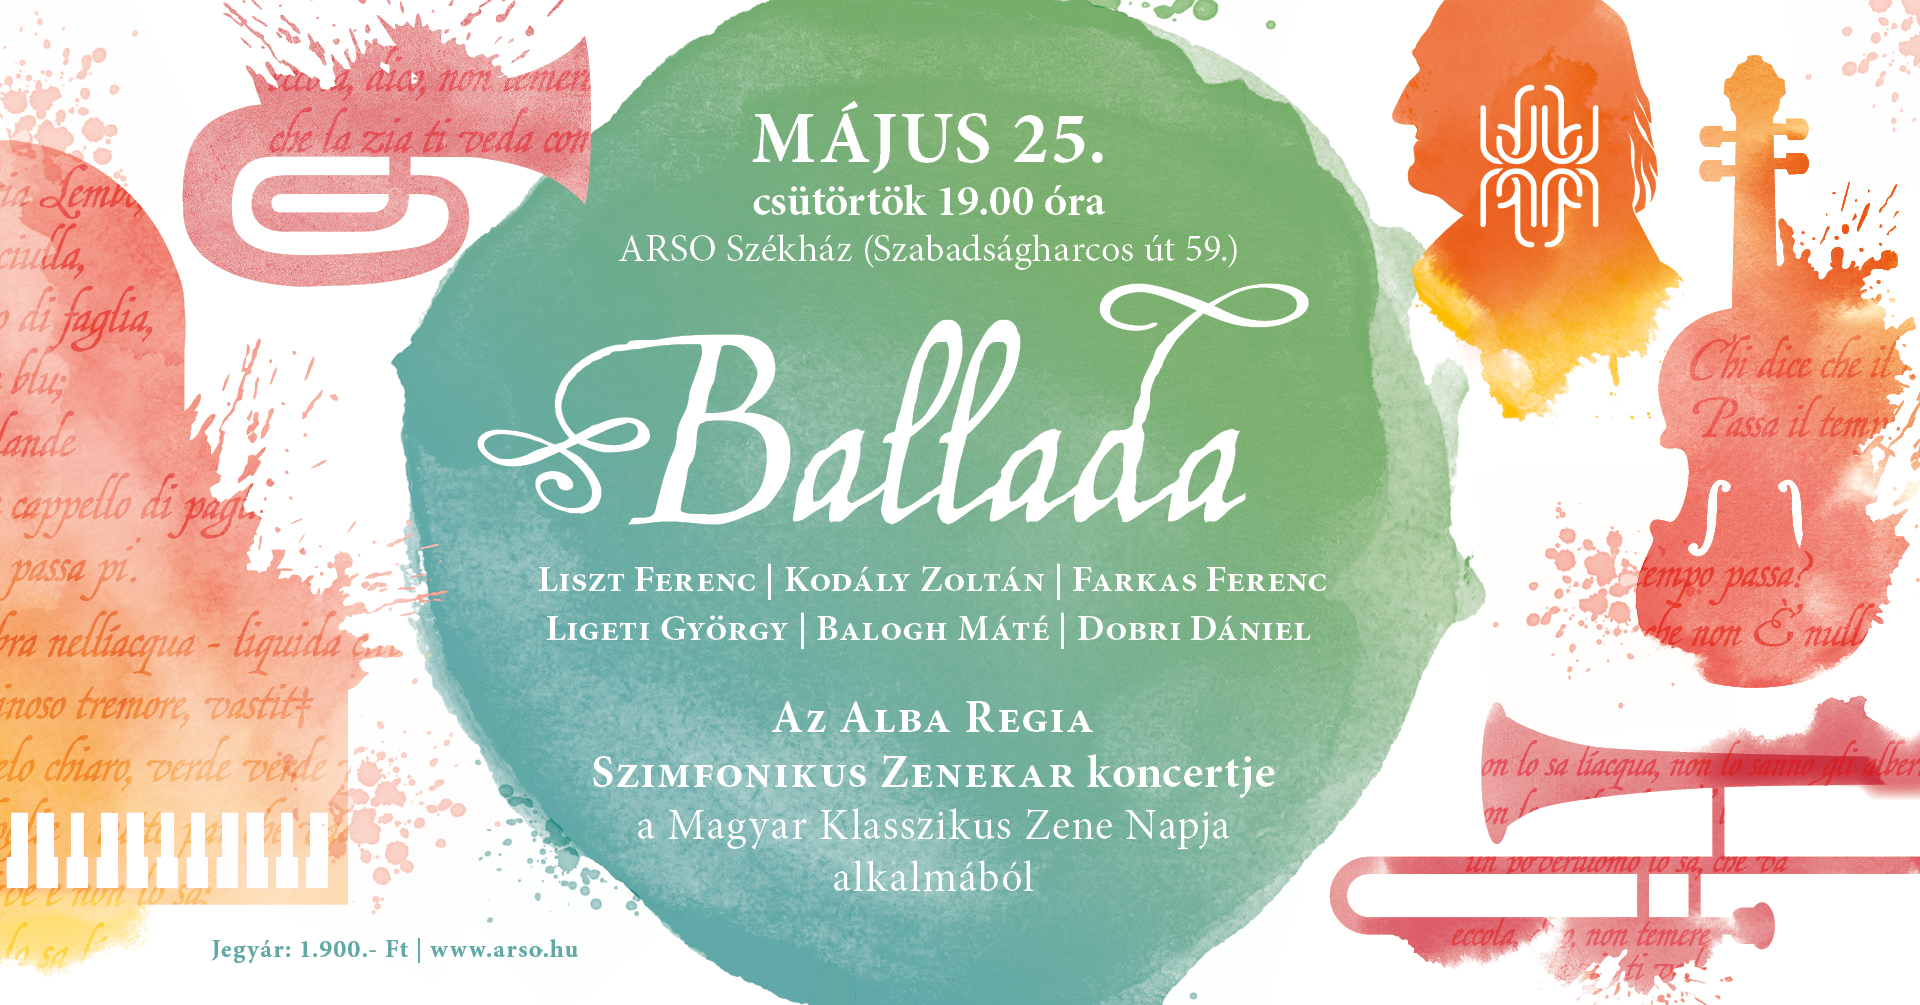 Ballada - az Alba Regia Szimfonikus Zenekar Magyar Klasszikus Zene Napja alkalmából tartott koncertje